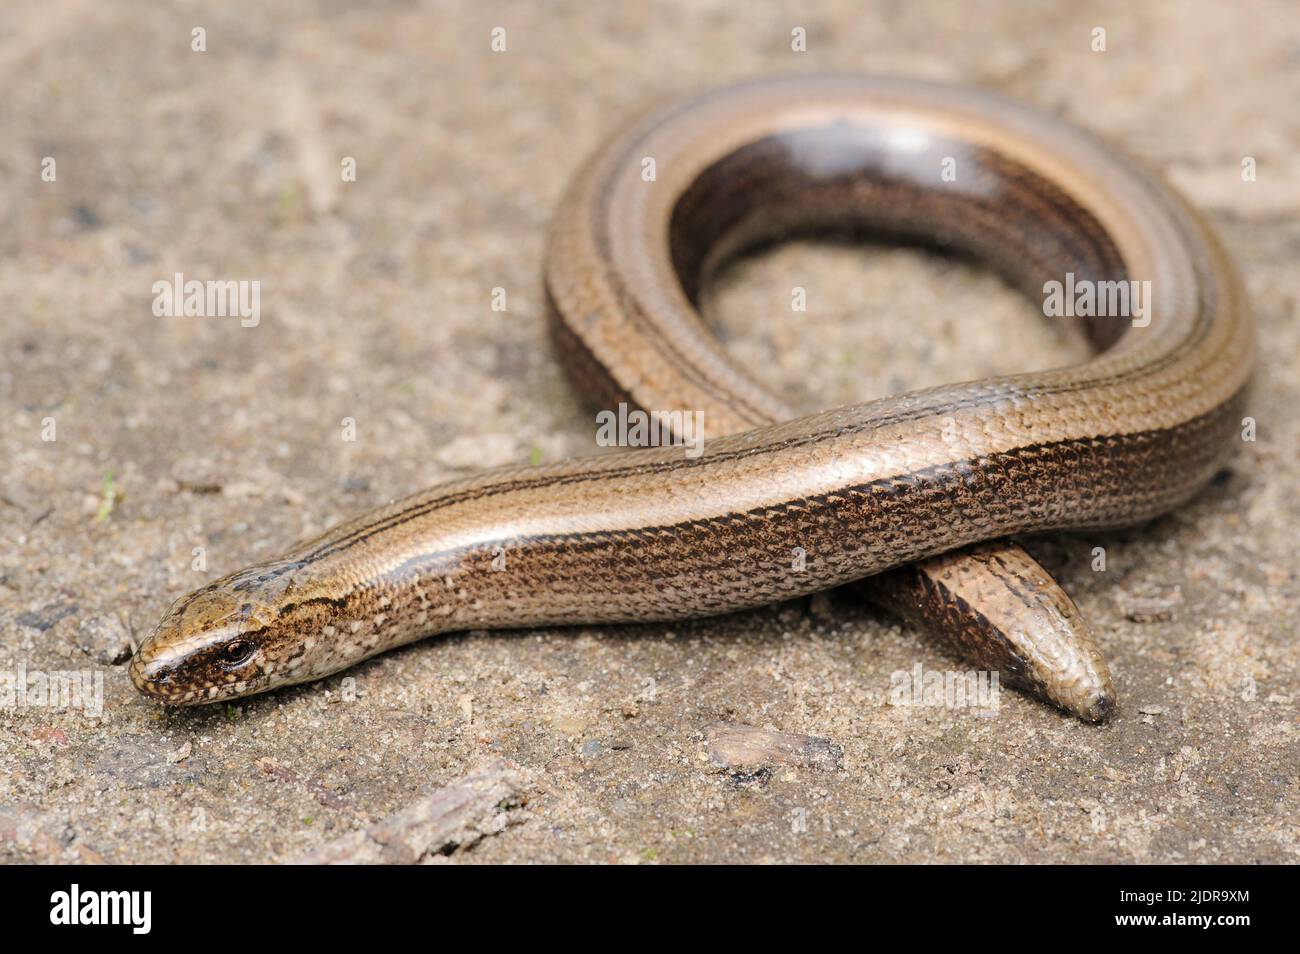 Rare animal, legless shiny harmless lizard slow worm on the ground Stock Photo